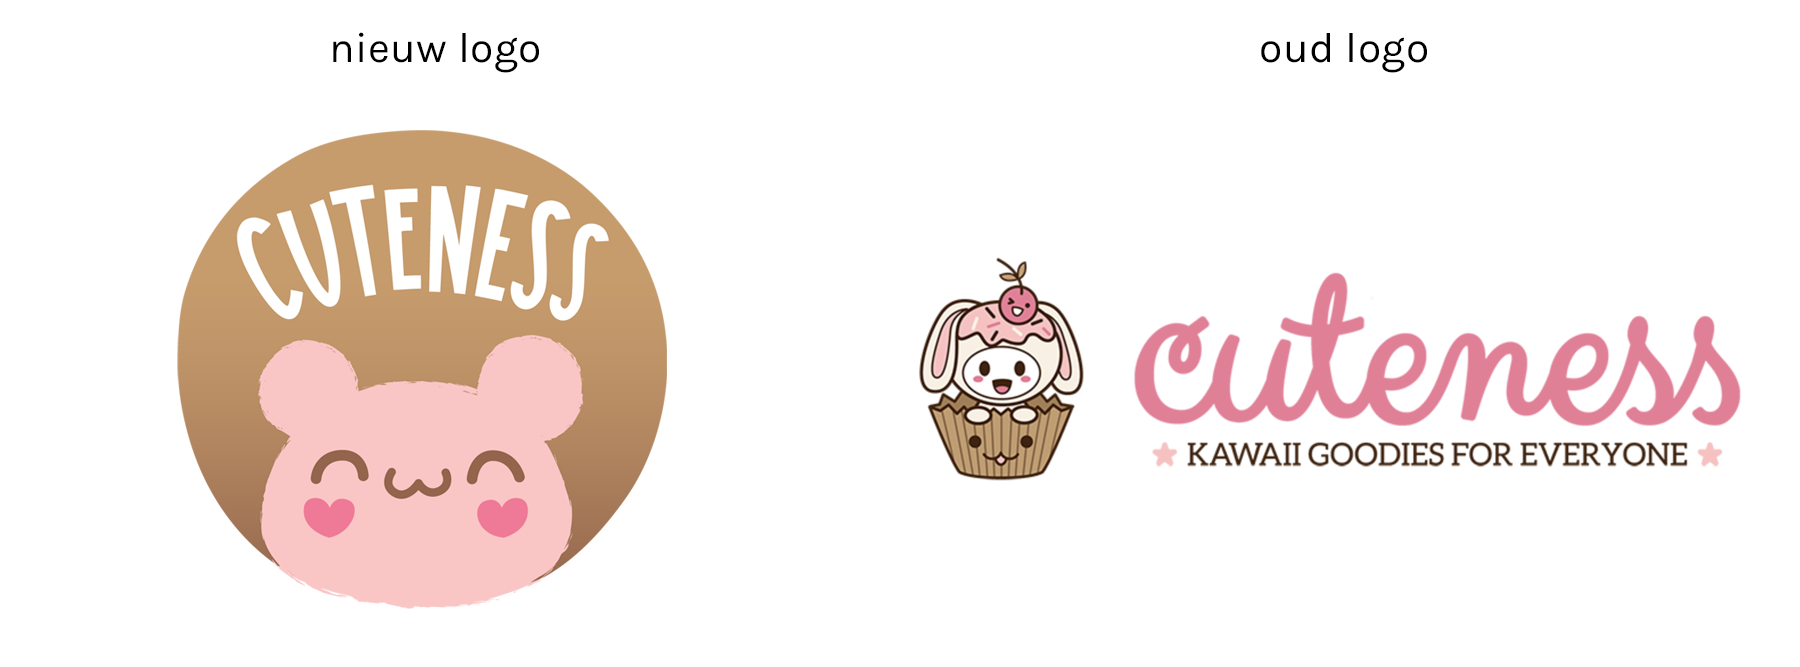 Cuteness logo rebranding